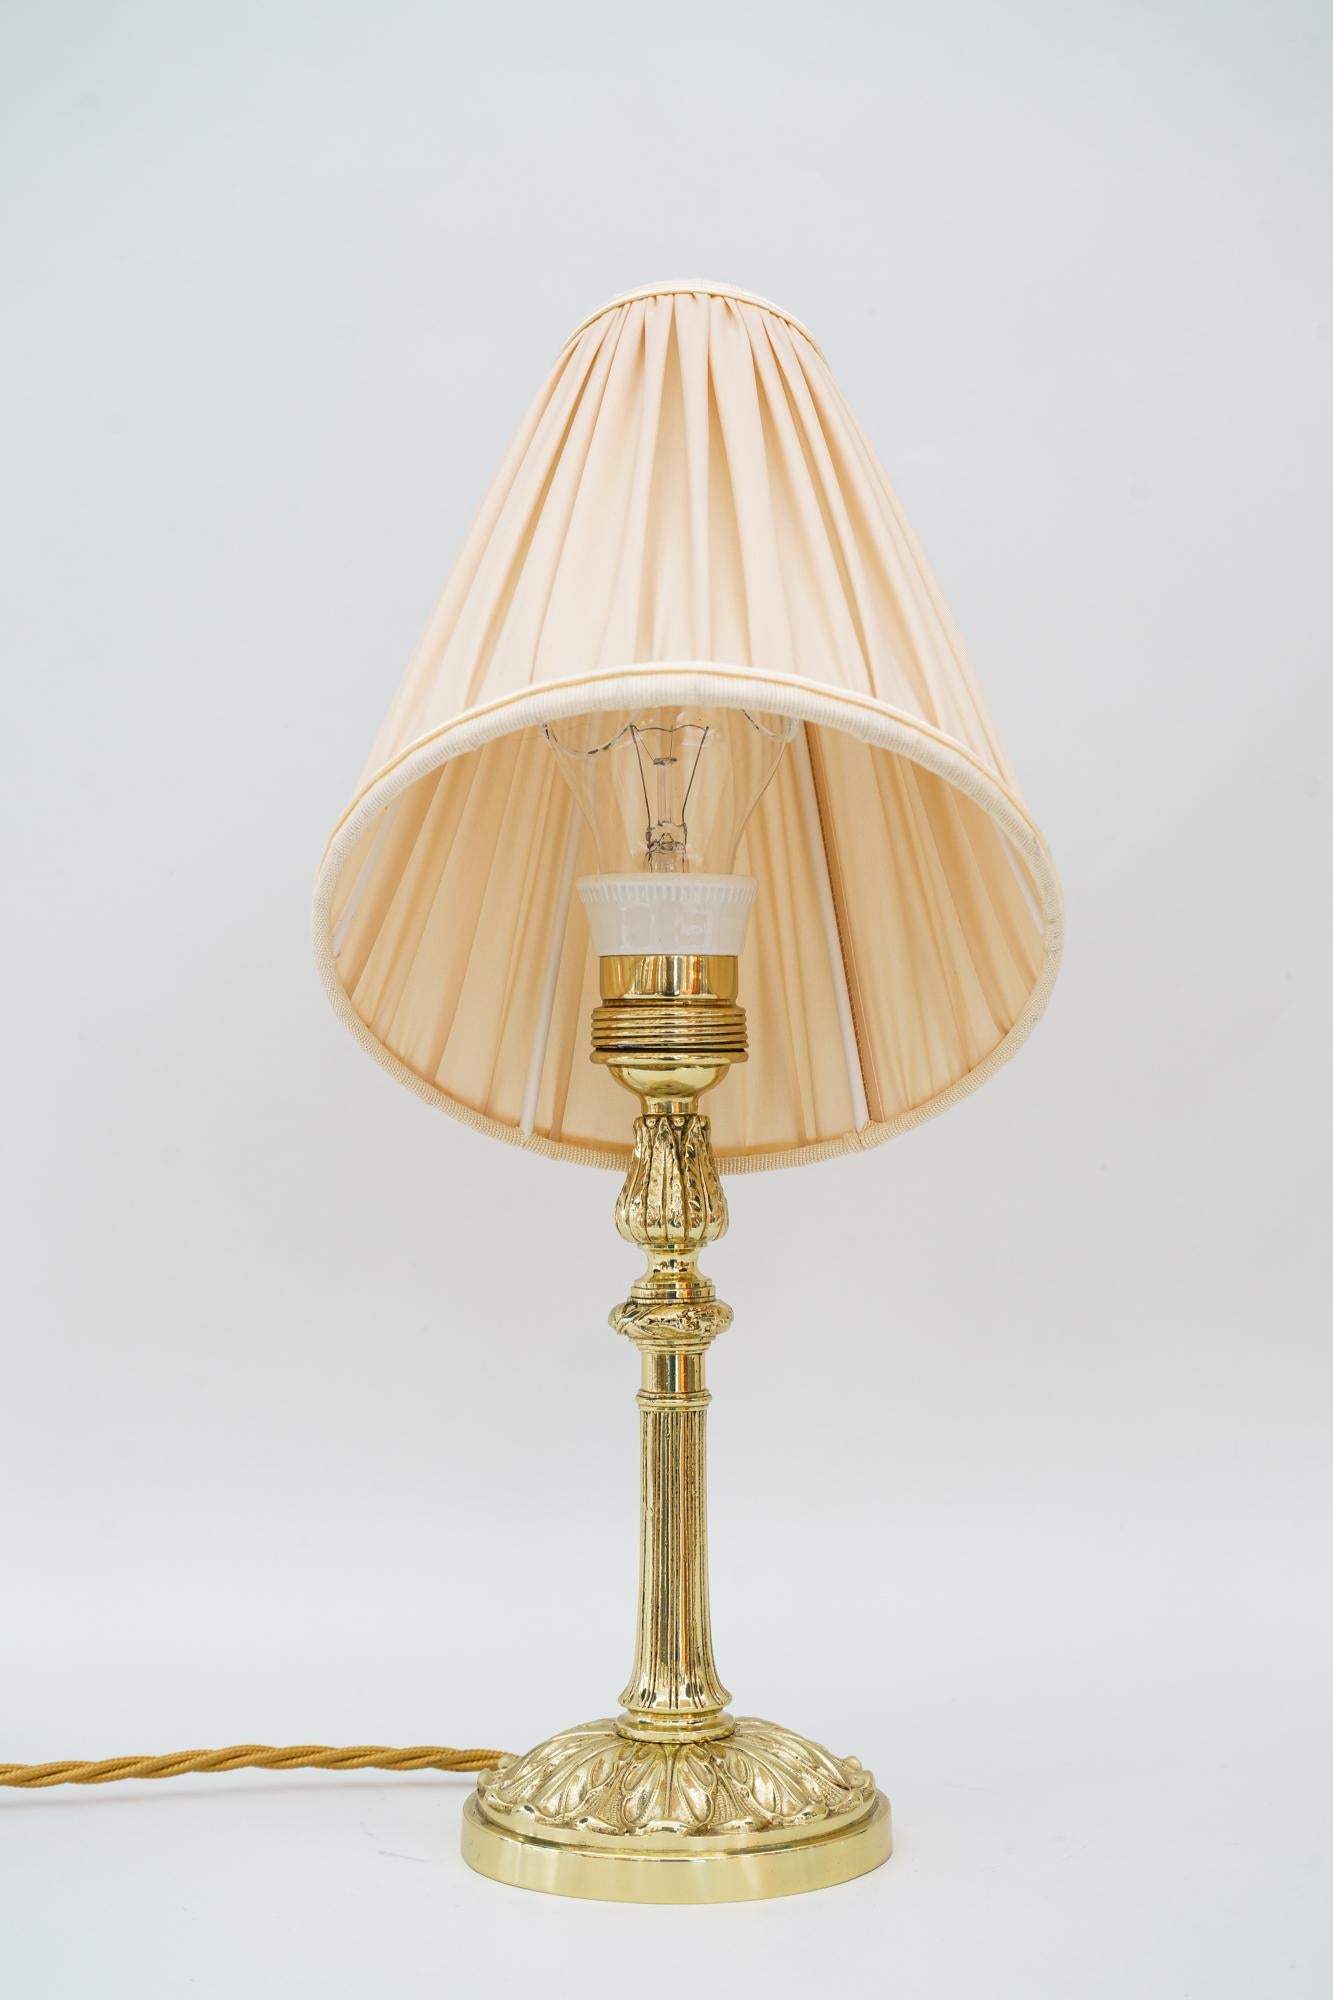 Early 20th Century Art Deco Table Lamp, Vienna, circa 1920s